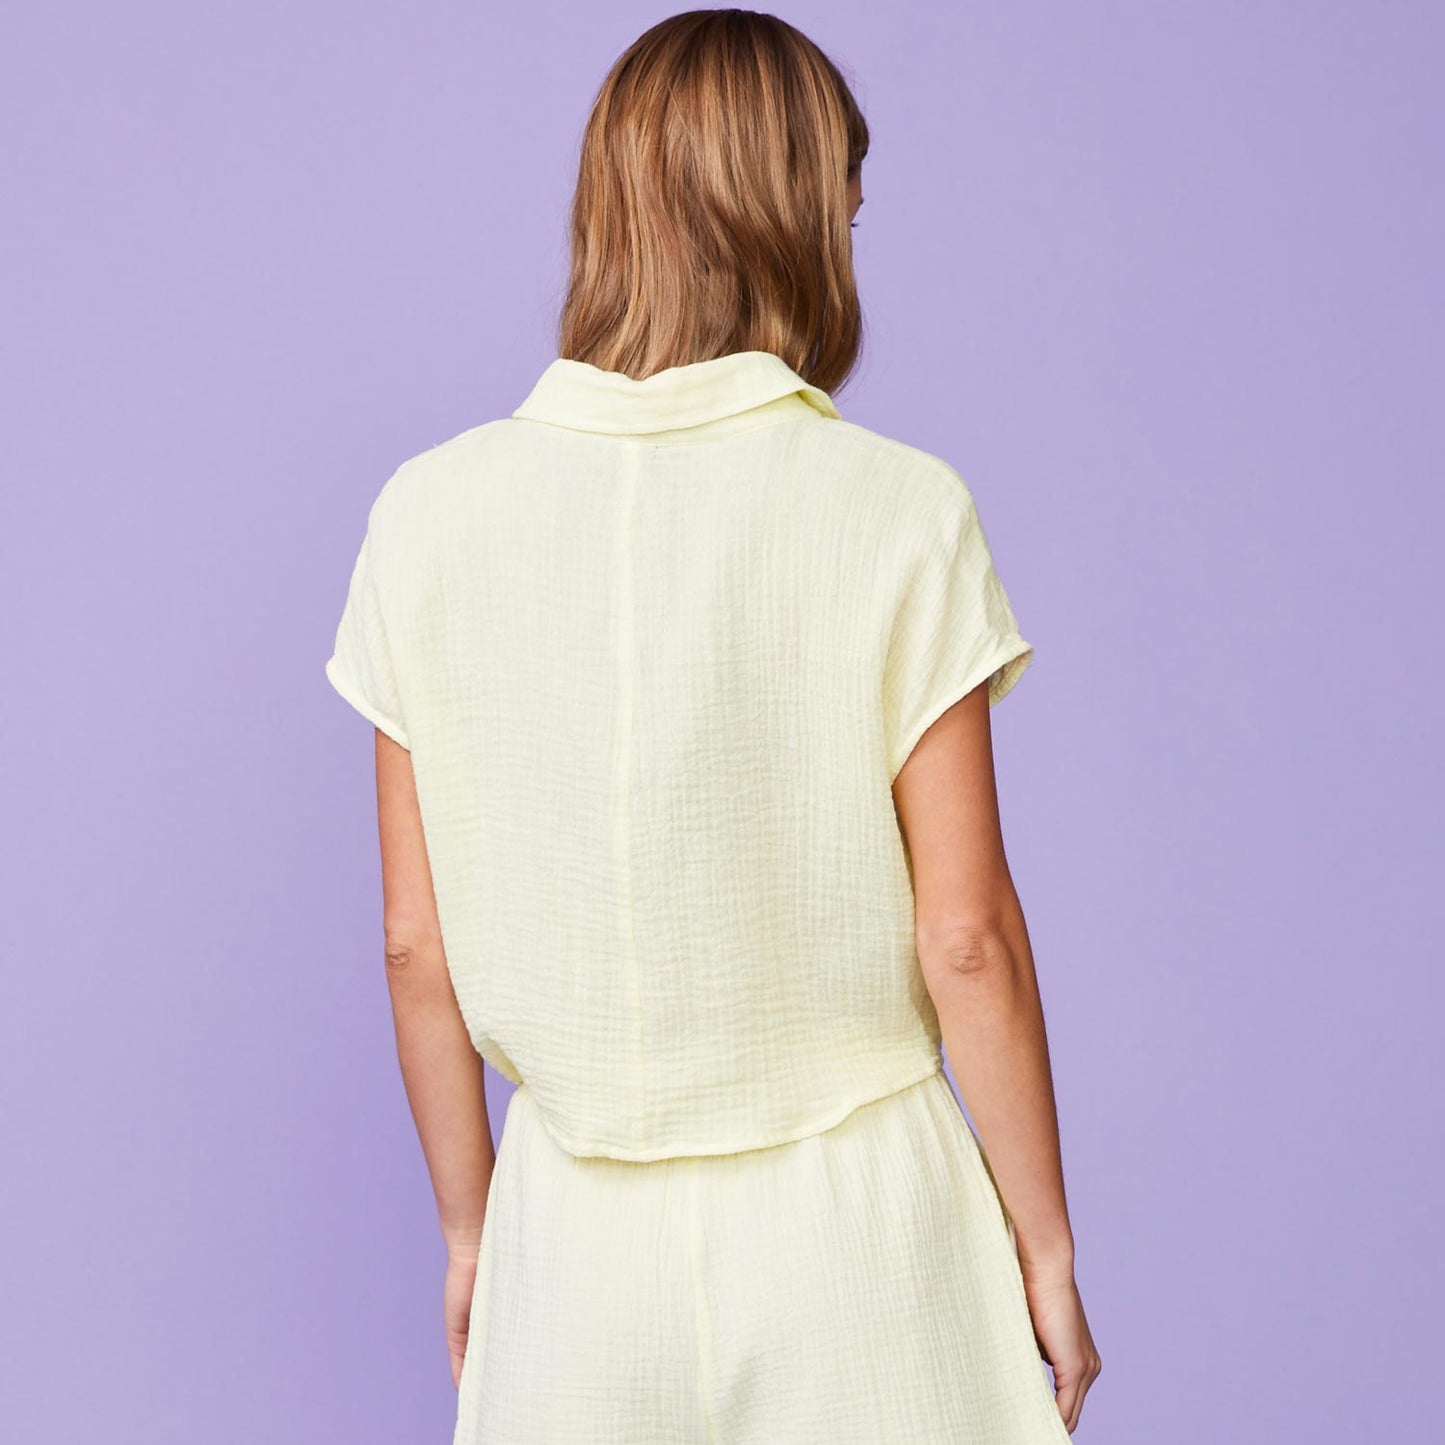 Back View of model wearing the Gauze Short Sleeve Shirt in Lemon